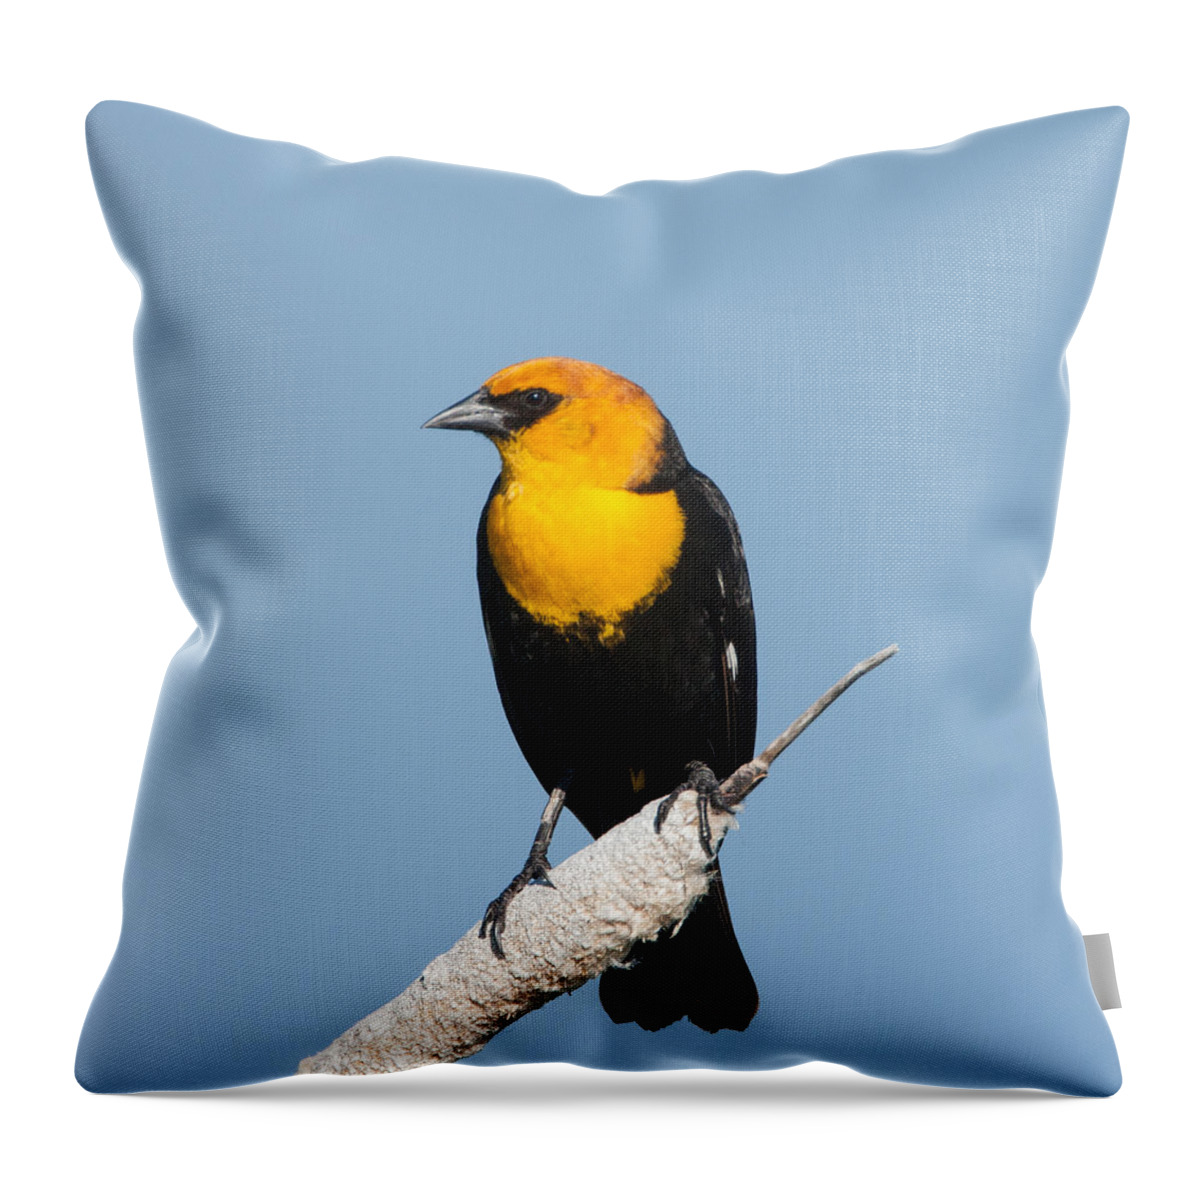 Black Bird Throw Pillow featuring the photograph Yellow Headed Blackbird by Jack Bell